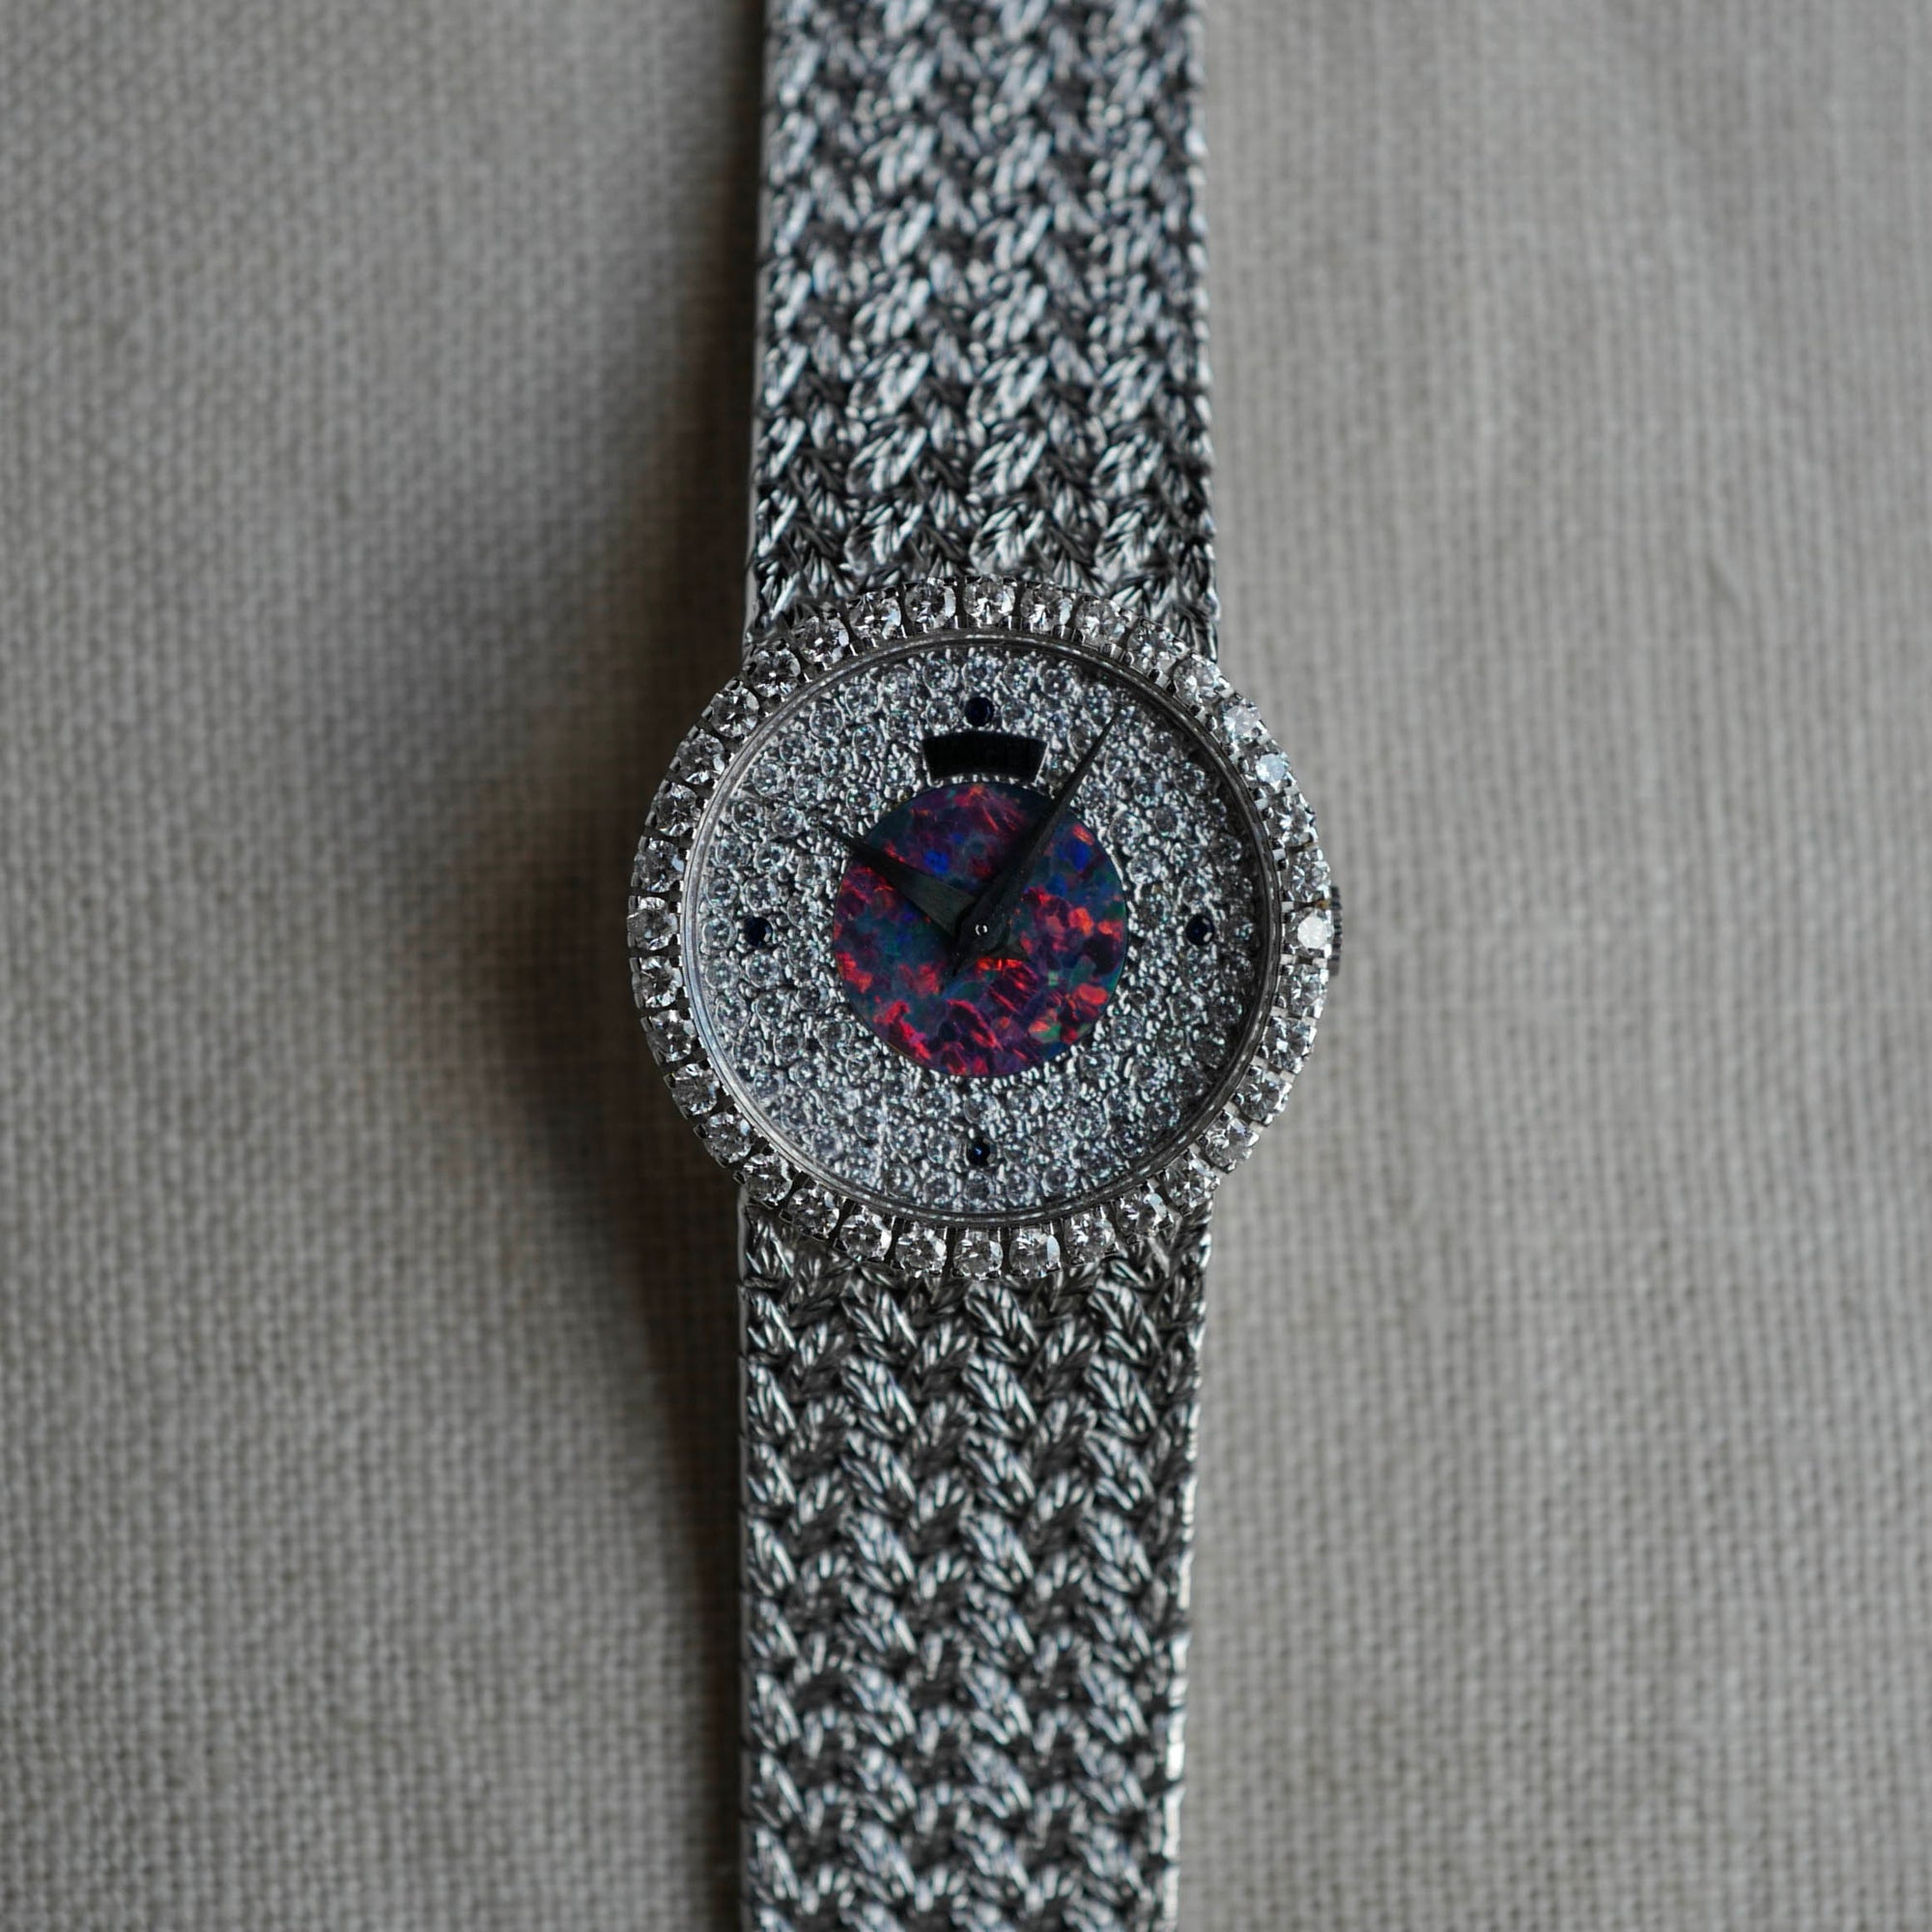 Piaget - Piaget White Gold Diamond Opal Watch Ref. 9706 - The Keystone Watches